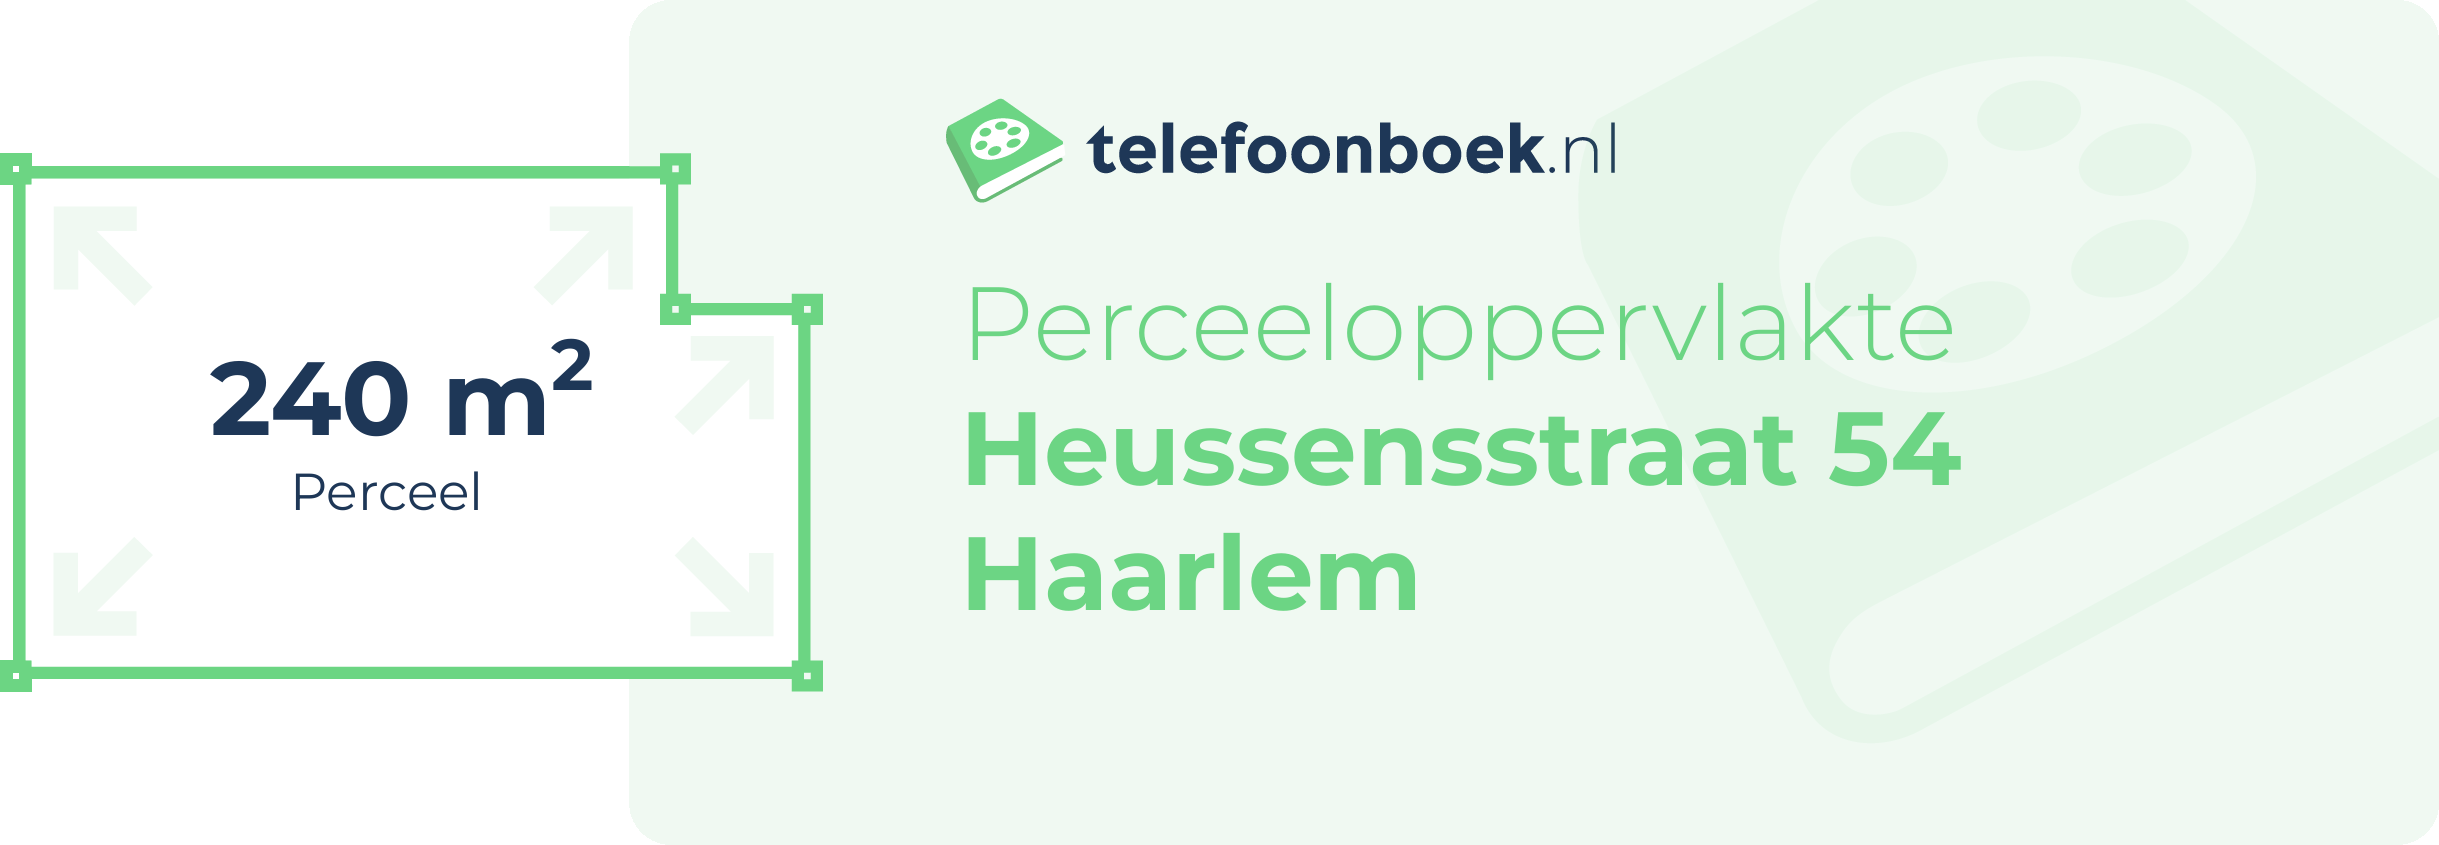 Perceeloppervlakte Heussensstraat 54 Haarlem